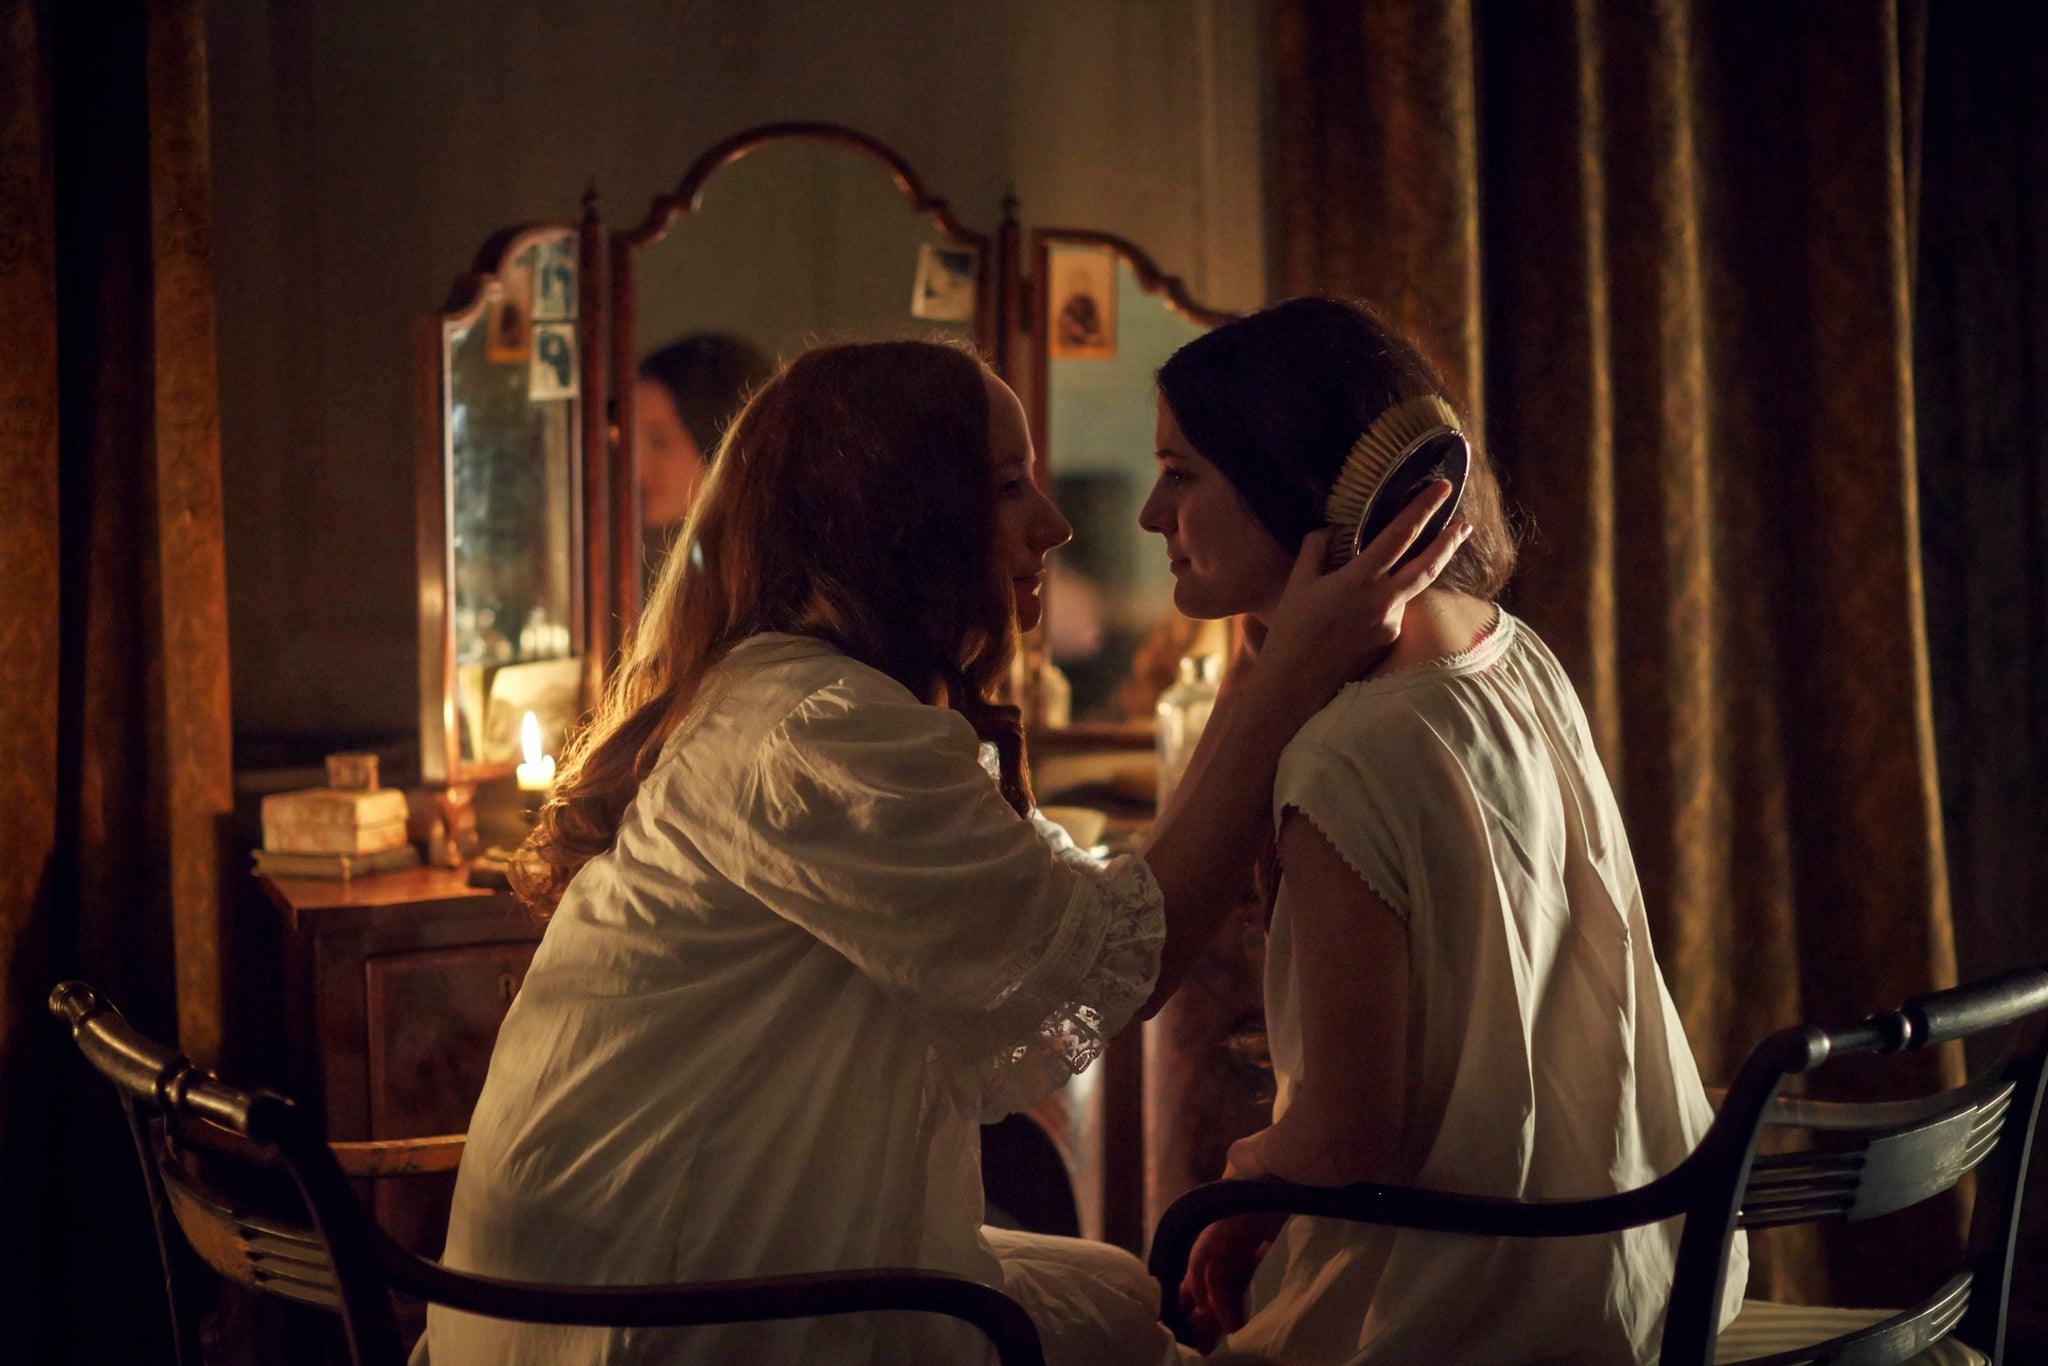 Virgina Woolf (Lydia Leonard) and Vanessa Bell (Phoebe Fox) as Stephens sisters